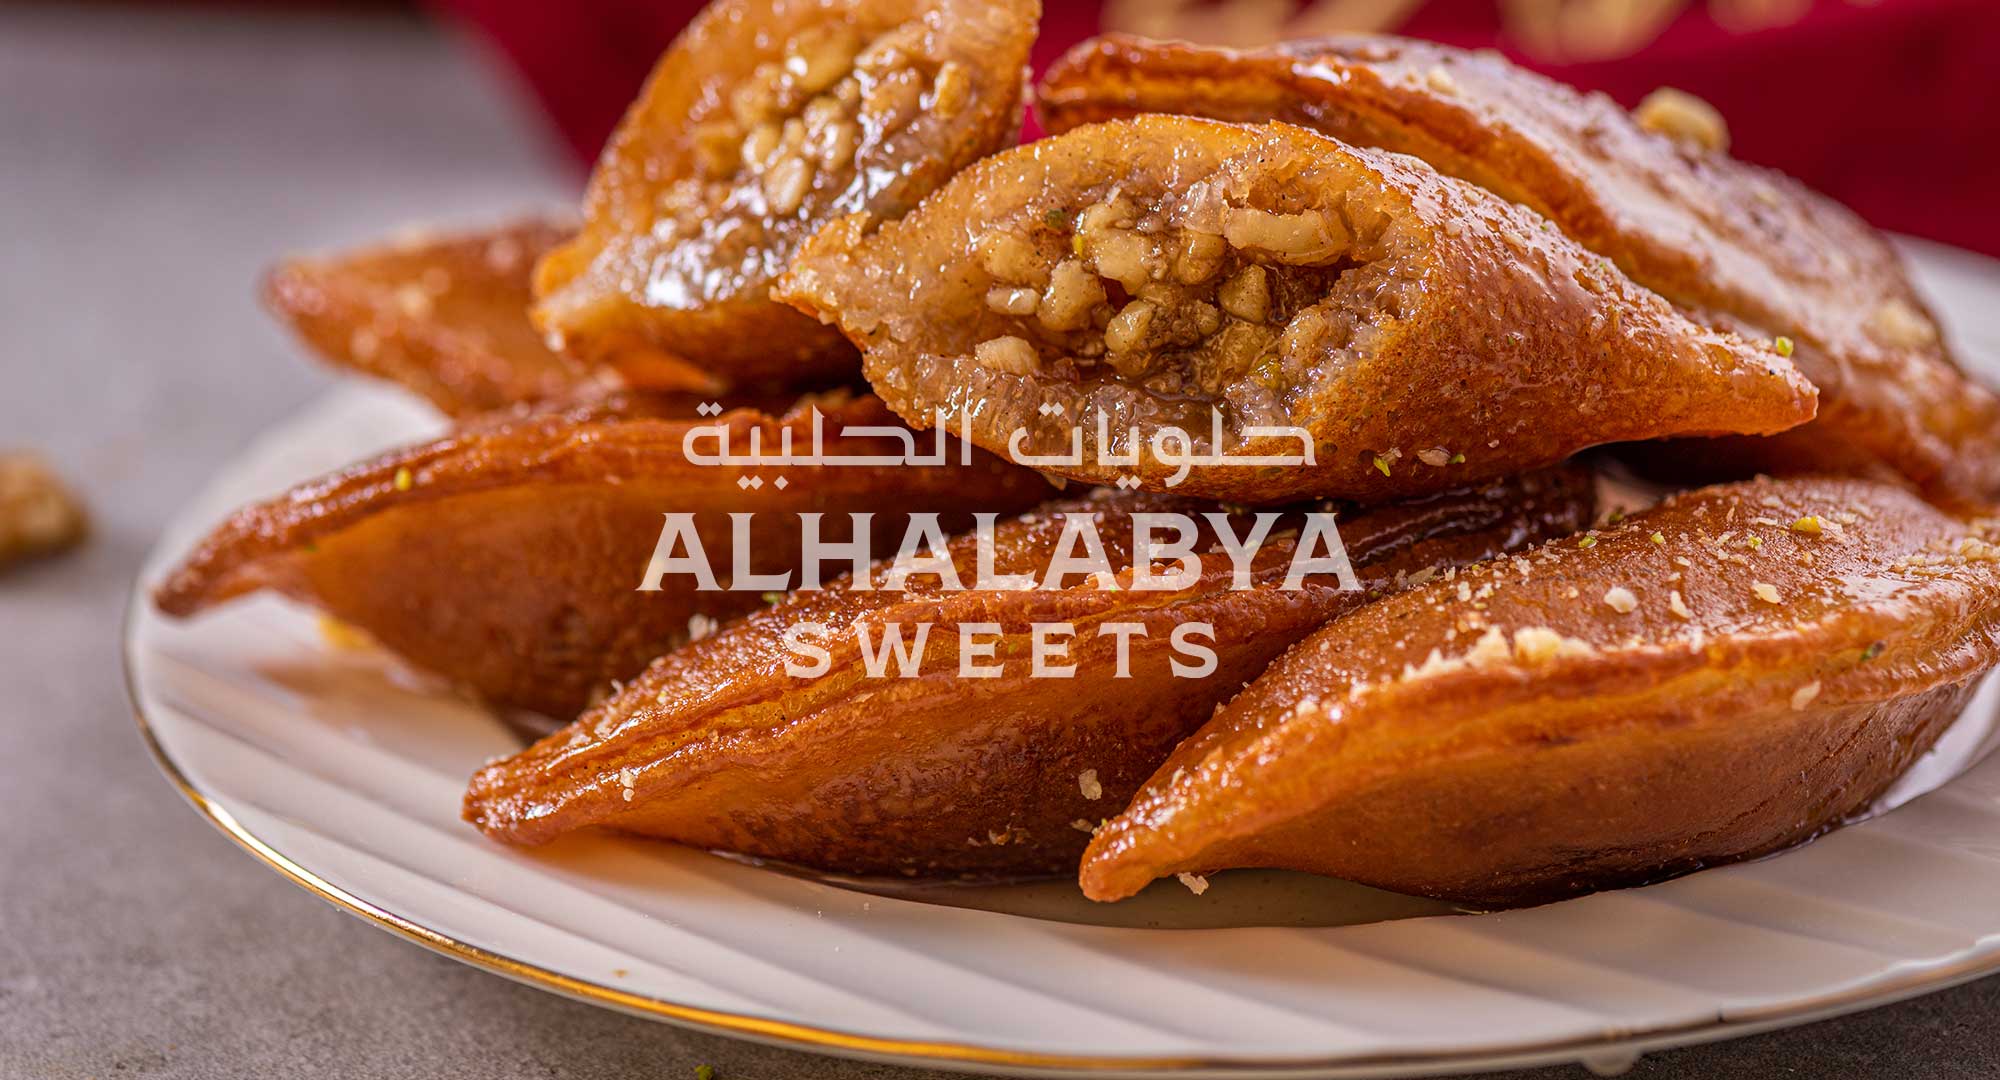 Al Halabya Sweets and Sharjah: A Sweet Symphony